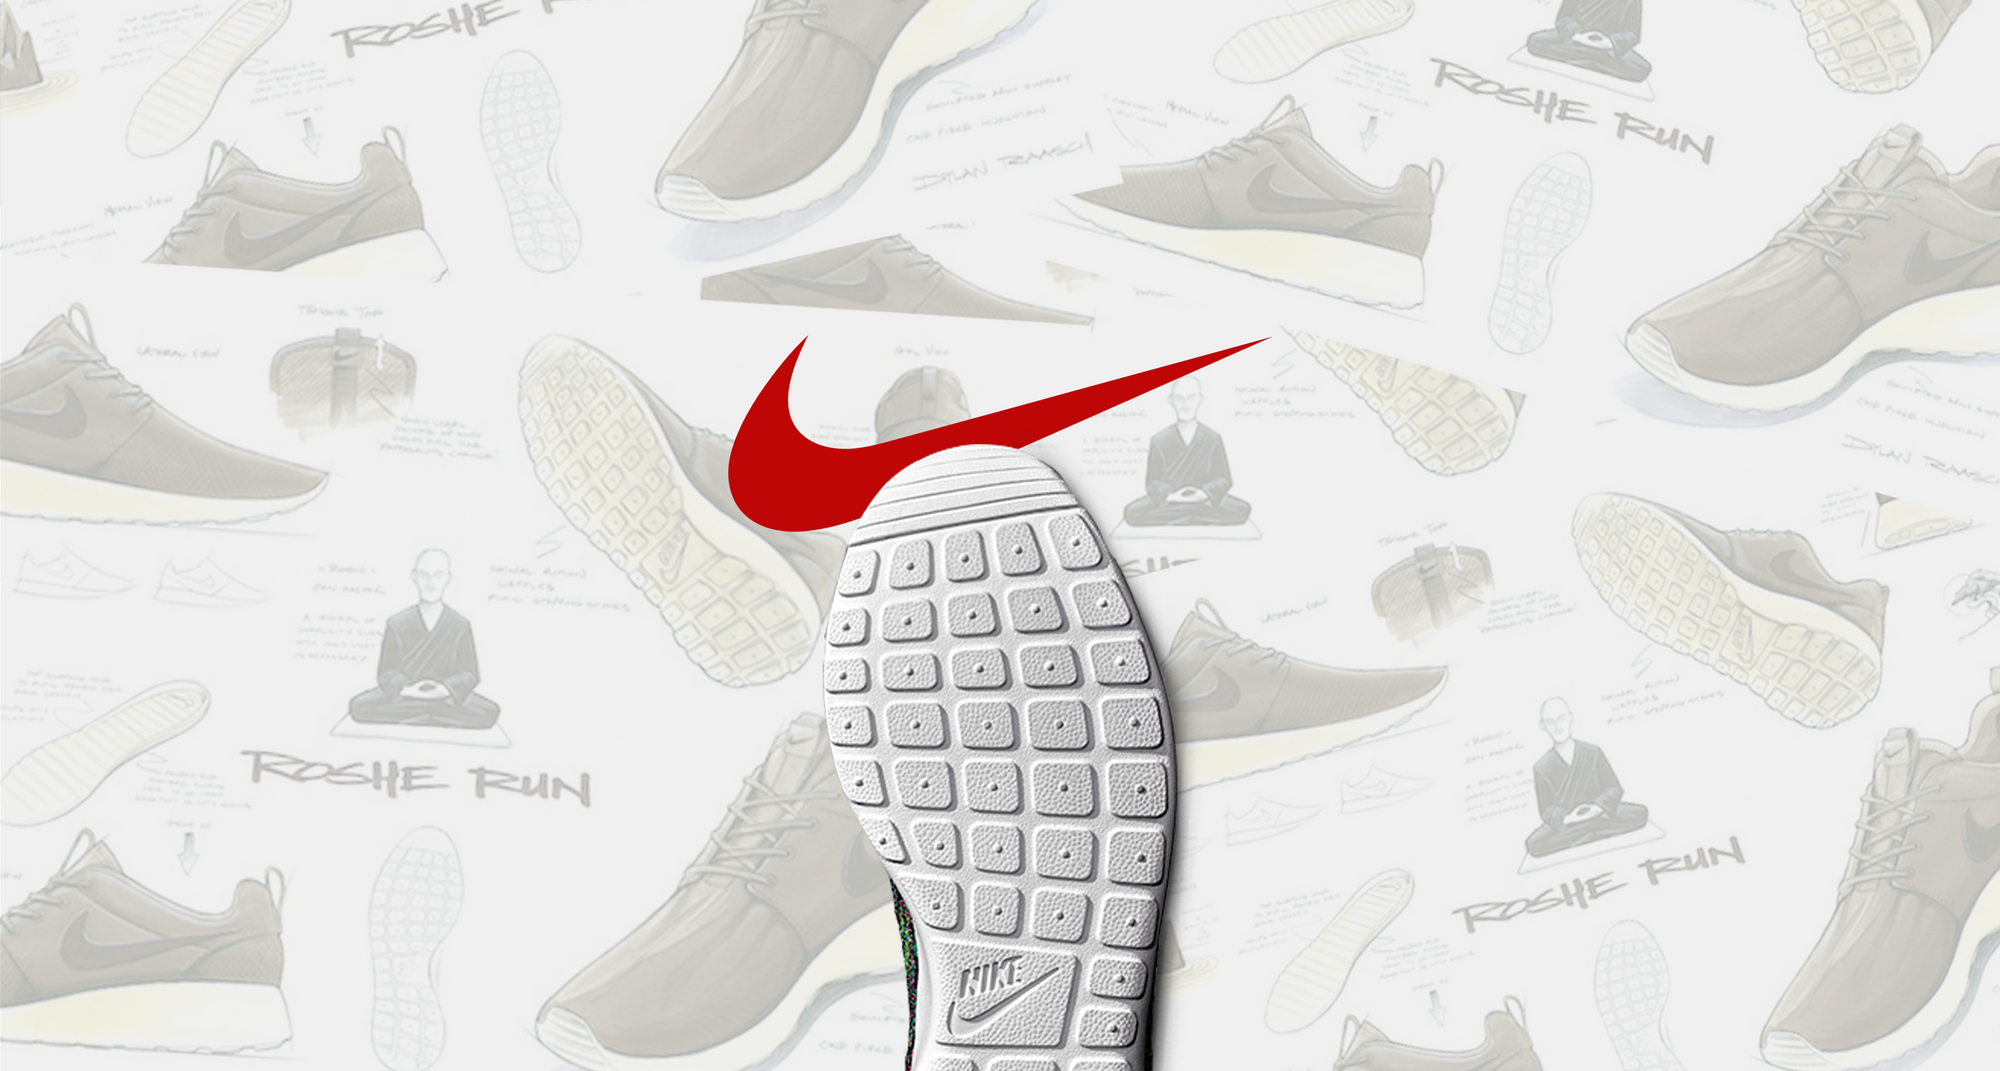 What Happened To The Nike Roshe Run?